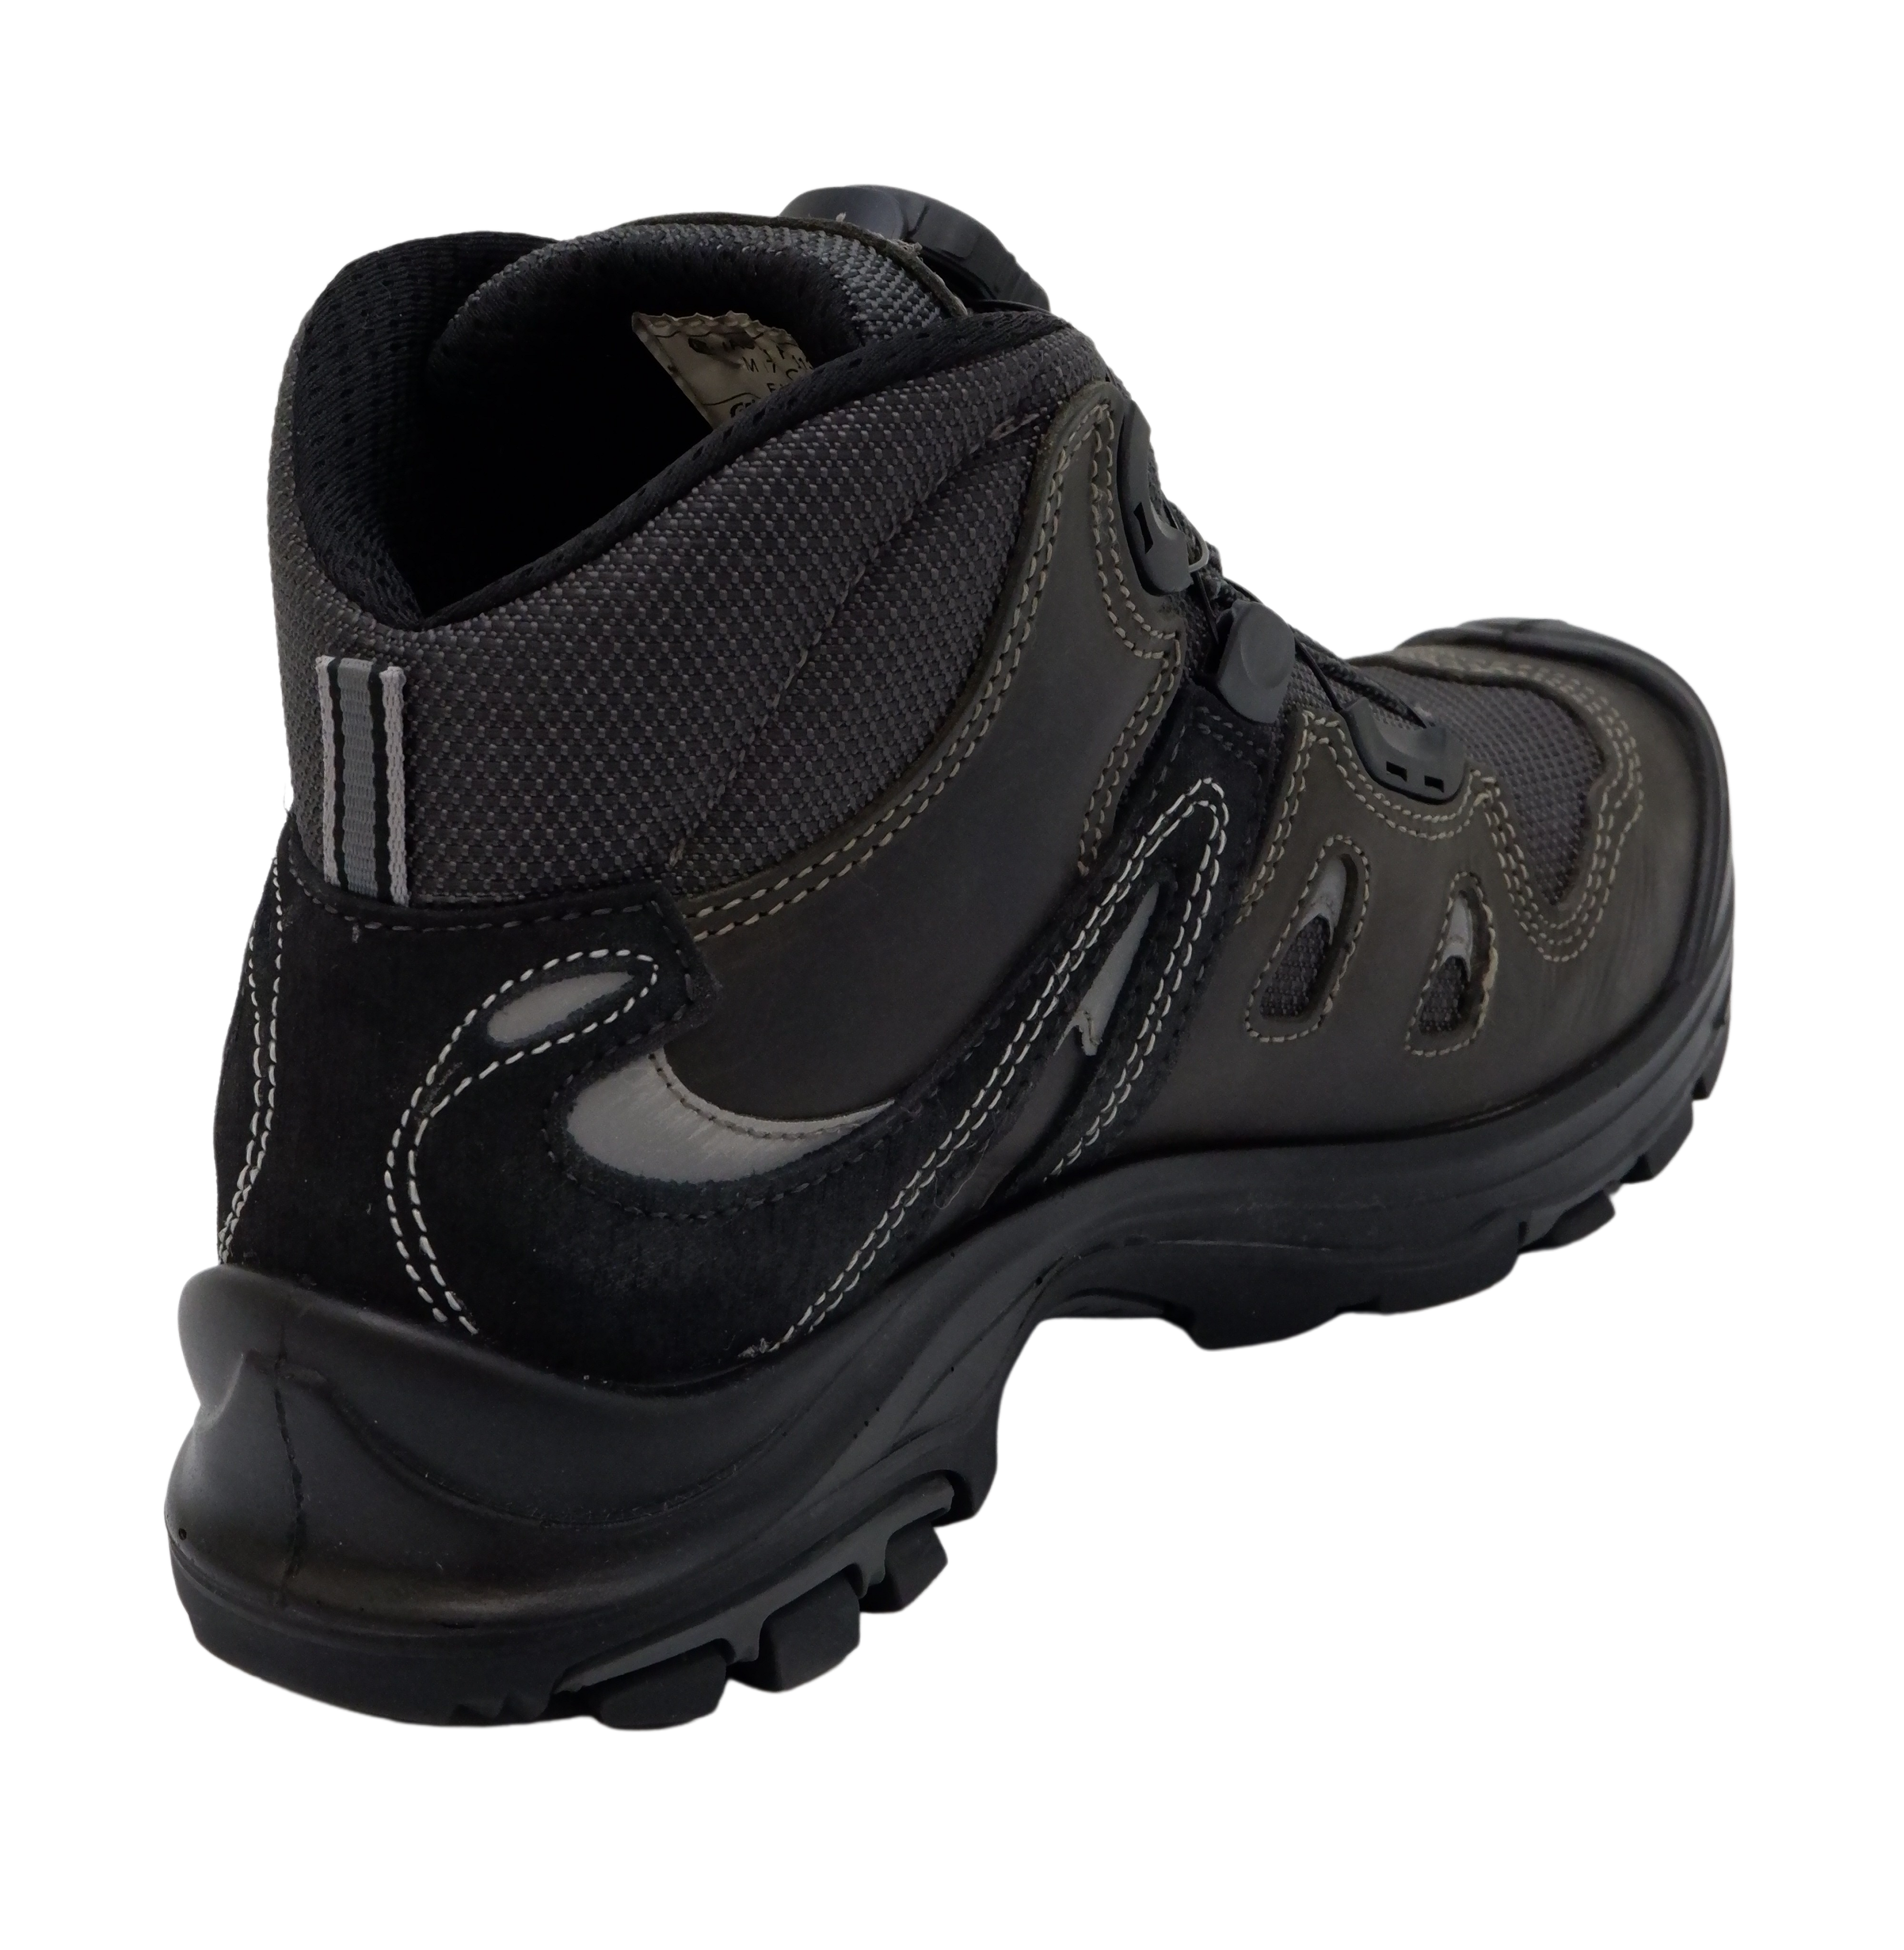 Grisport Men's Safety Work Boots BOA Fairweather 6" Steel Toe Cap with Vibram® TC4+ Sole  Sizes 7-13